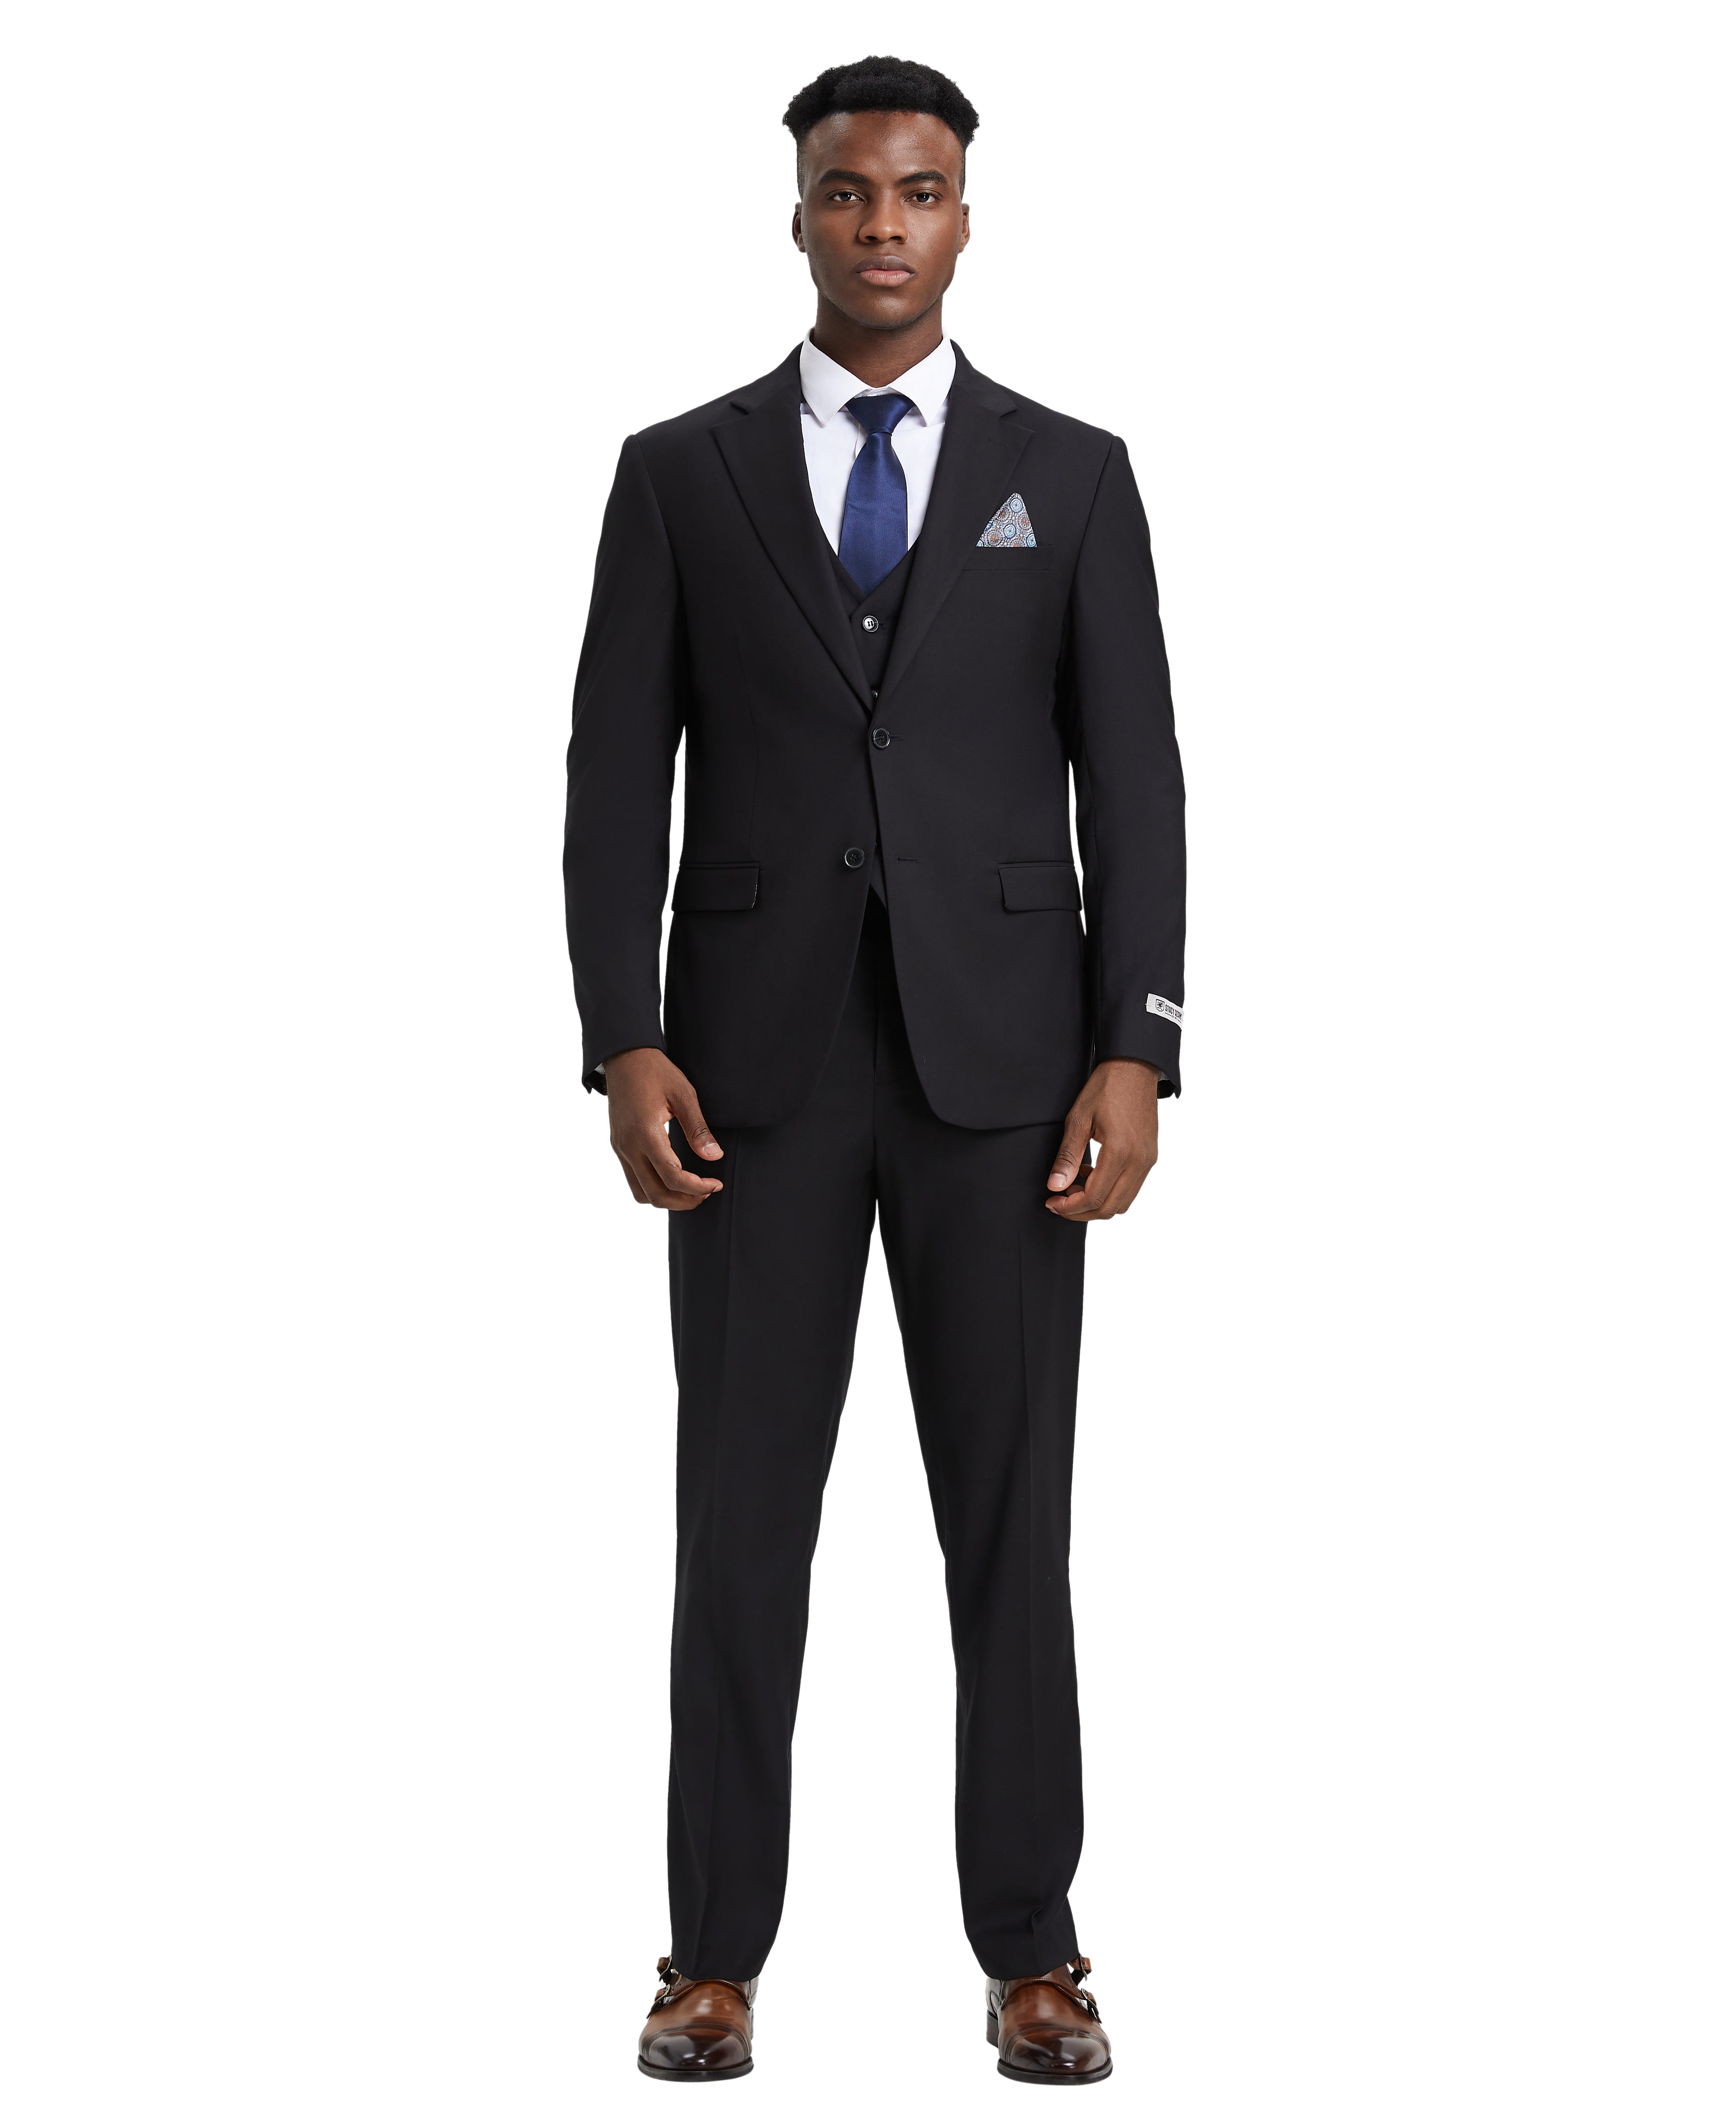 Stacy Adams Hybrid-Fit Vested Suit, Solid Black